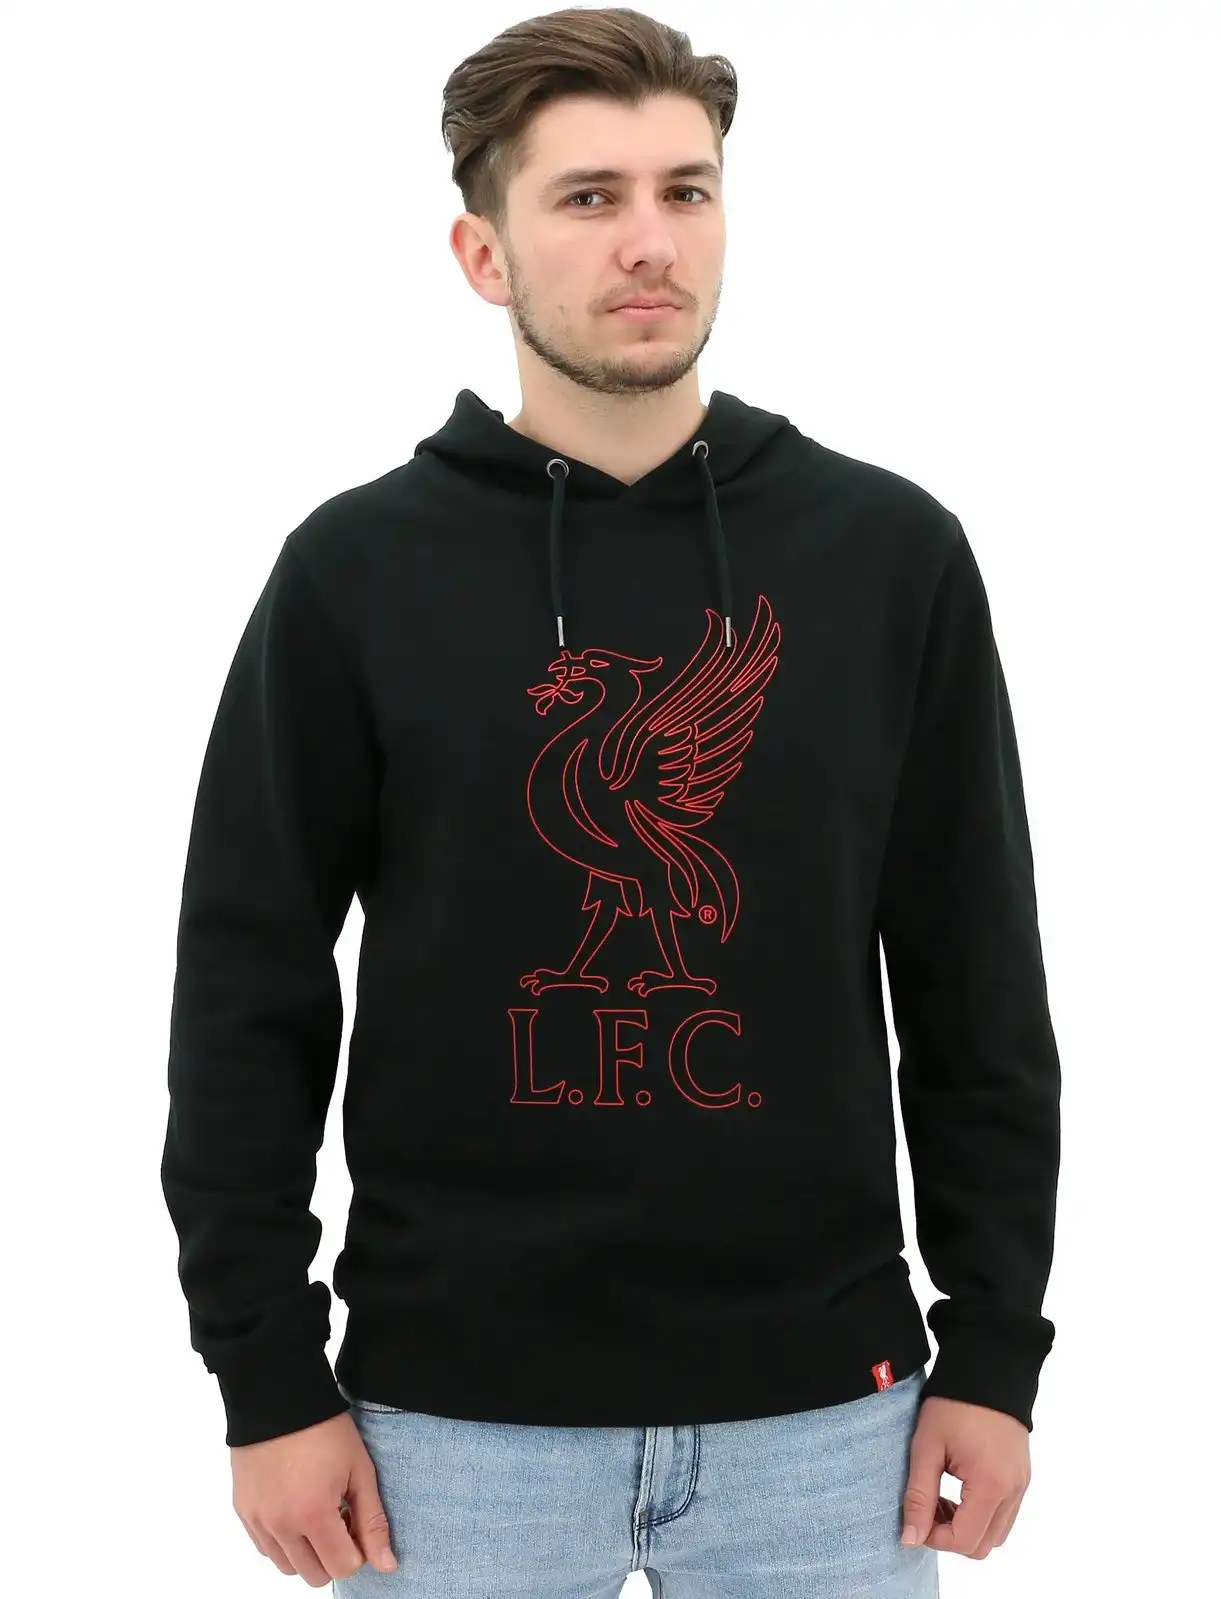 Liverpool FC Men's Hoodie Jumper Winter Warm Soccer Football Liverbird - Black